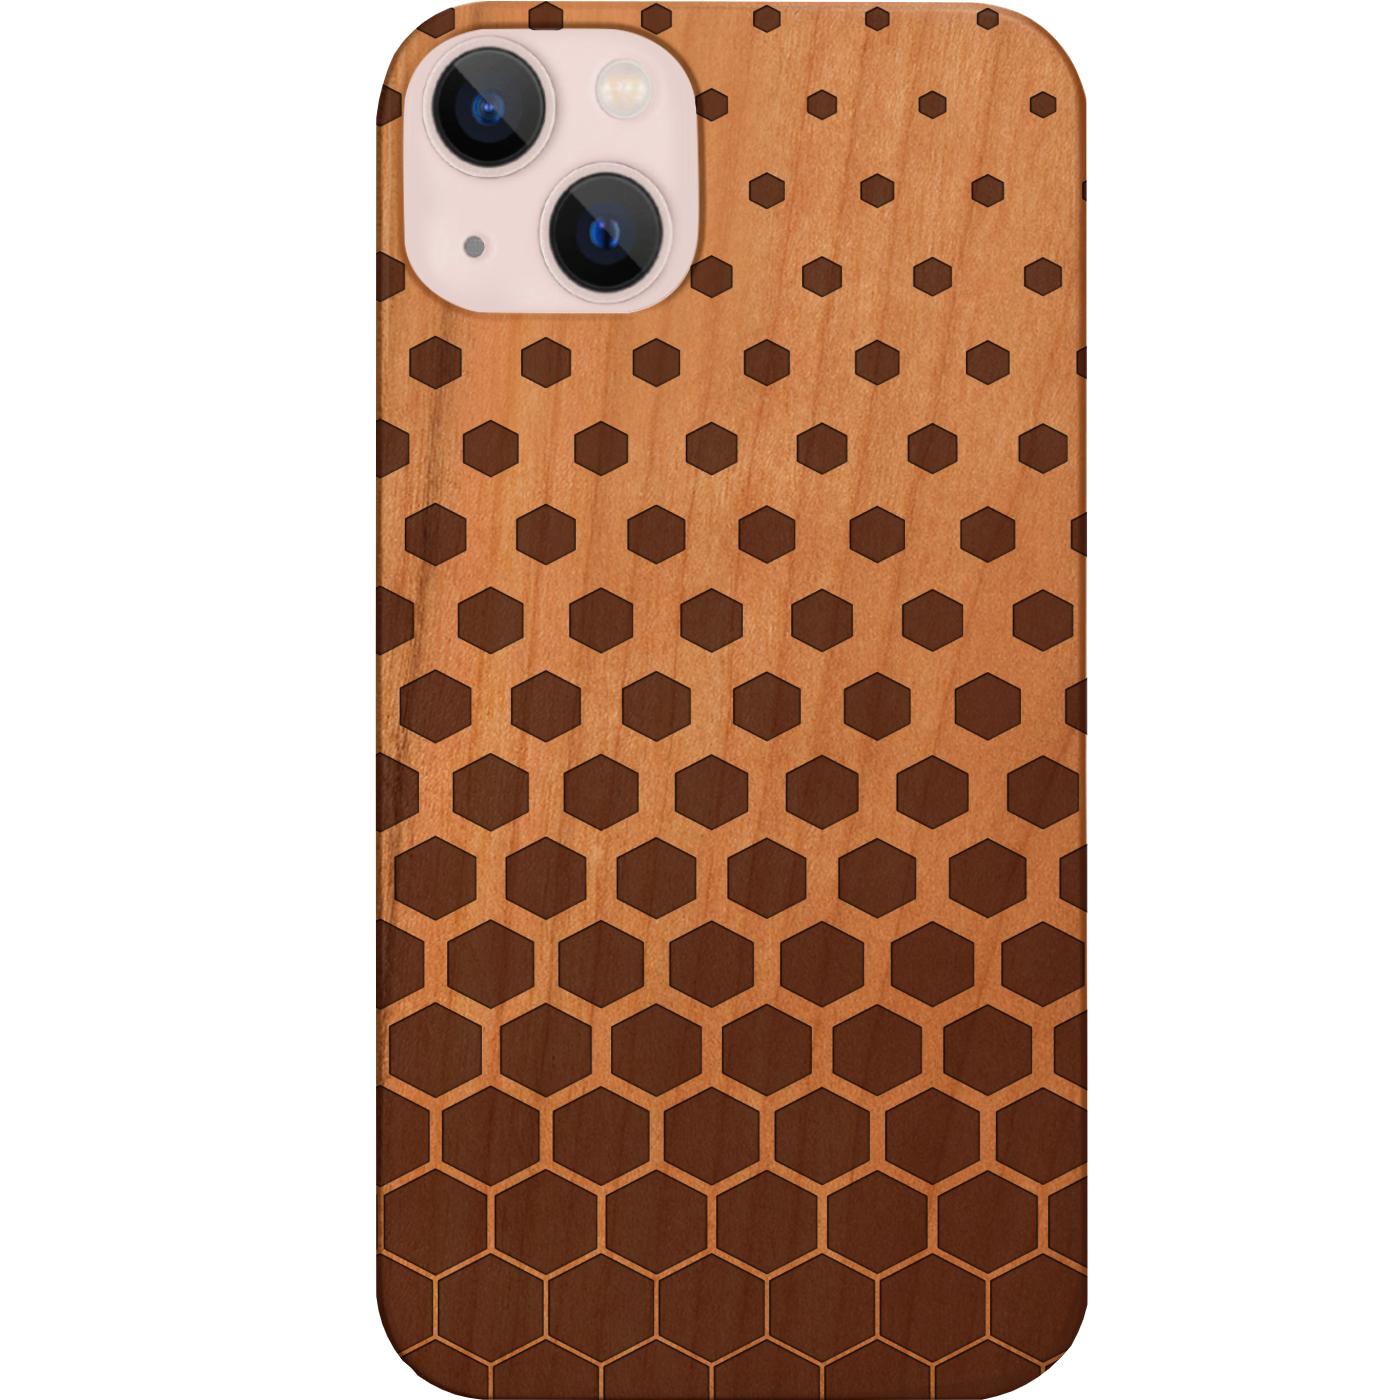 Hexagon Pattern 1 - Engraved Phone Case